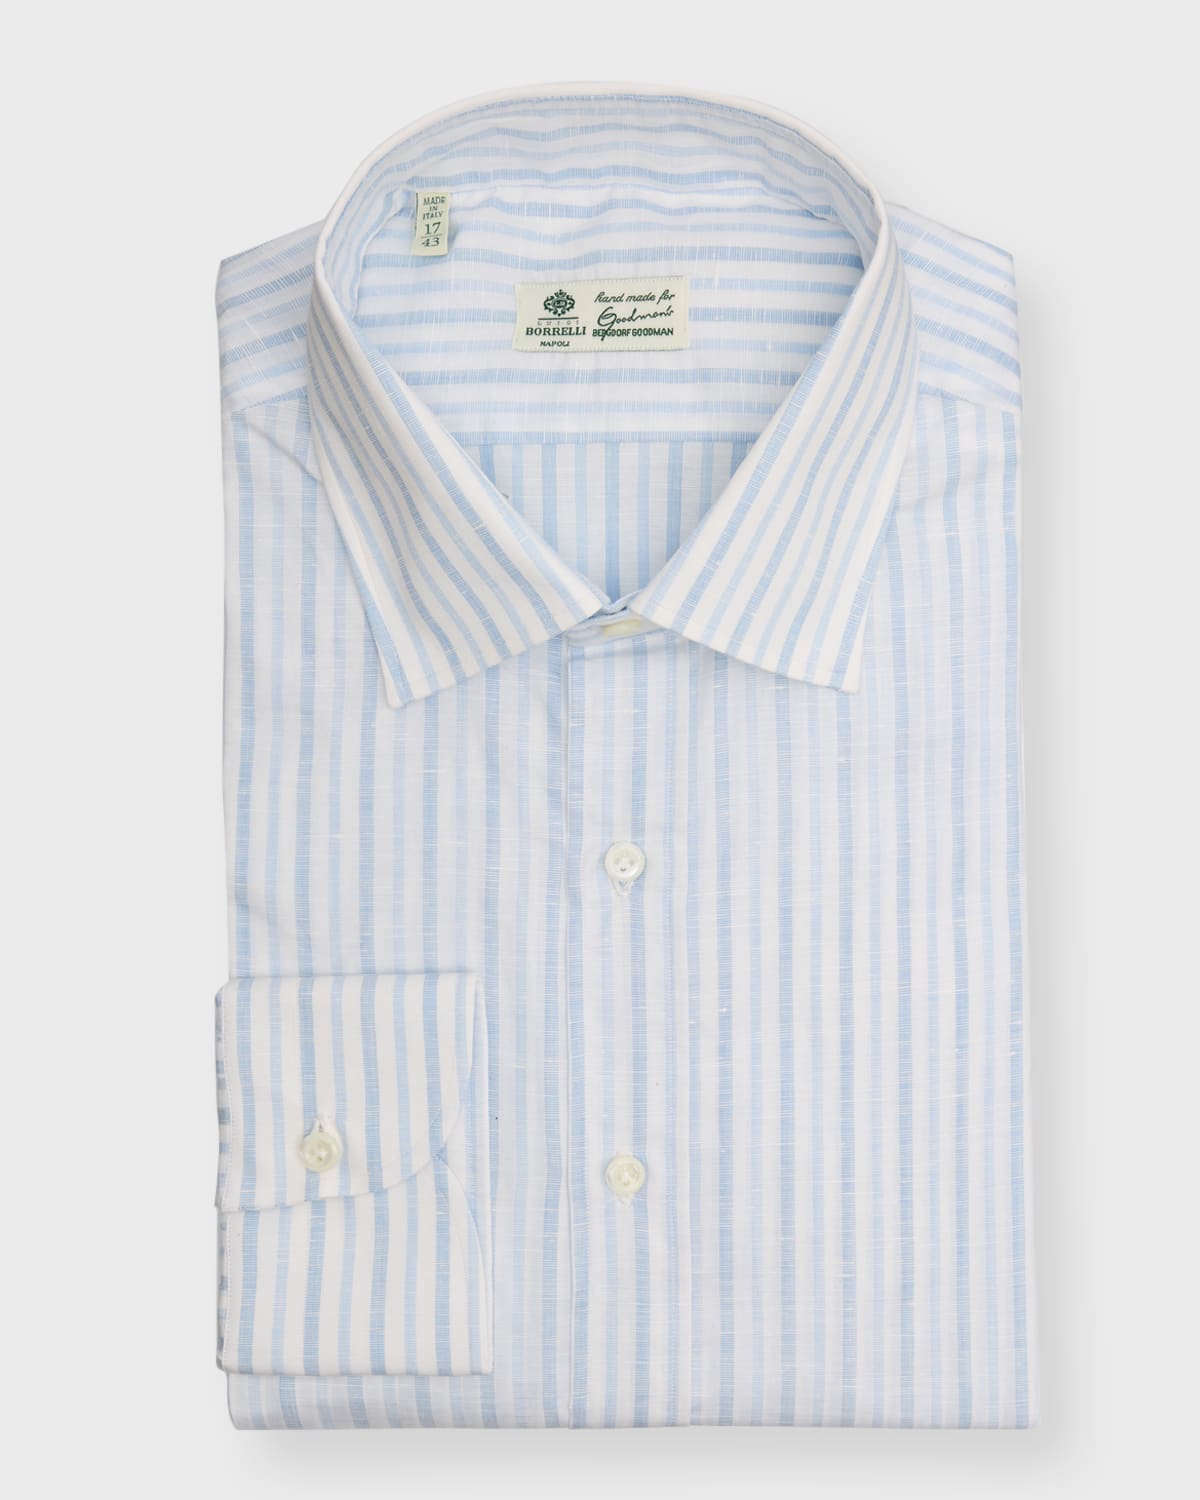 Borrelli Men's Cotton Stripe Dress Shirt In 21 Blue White